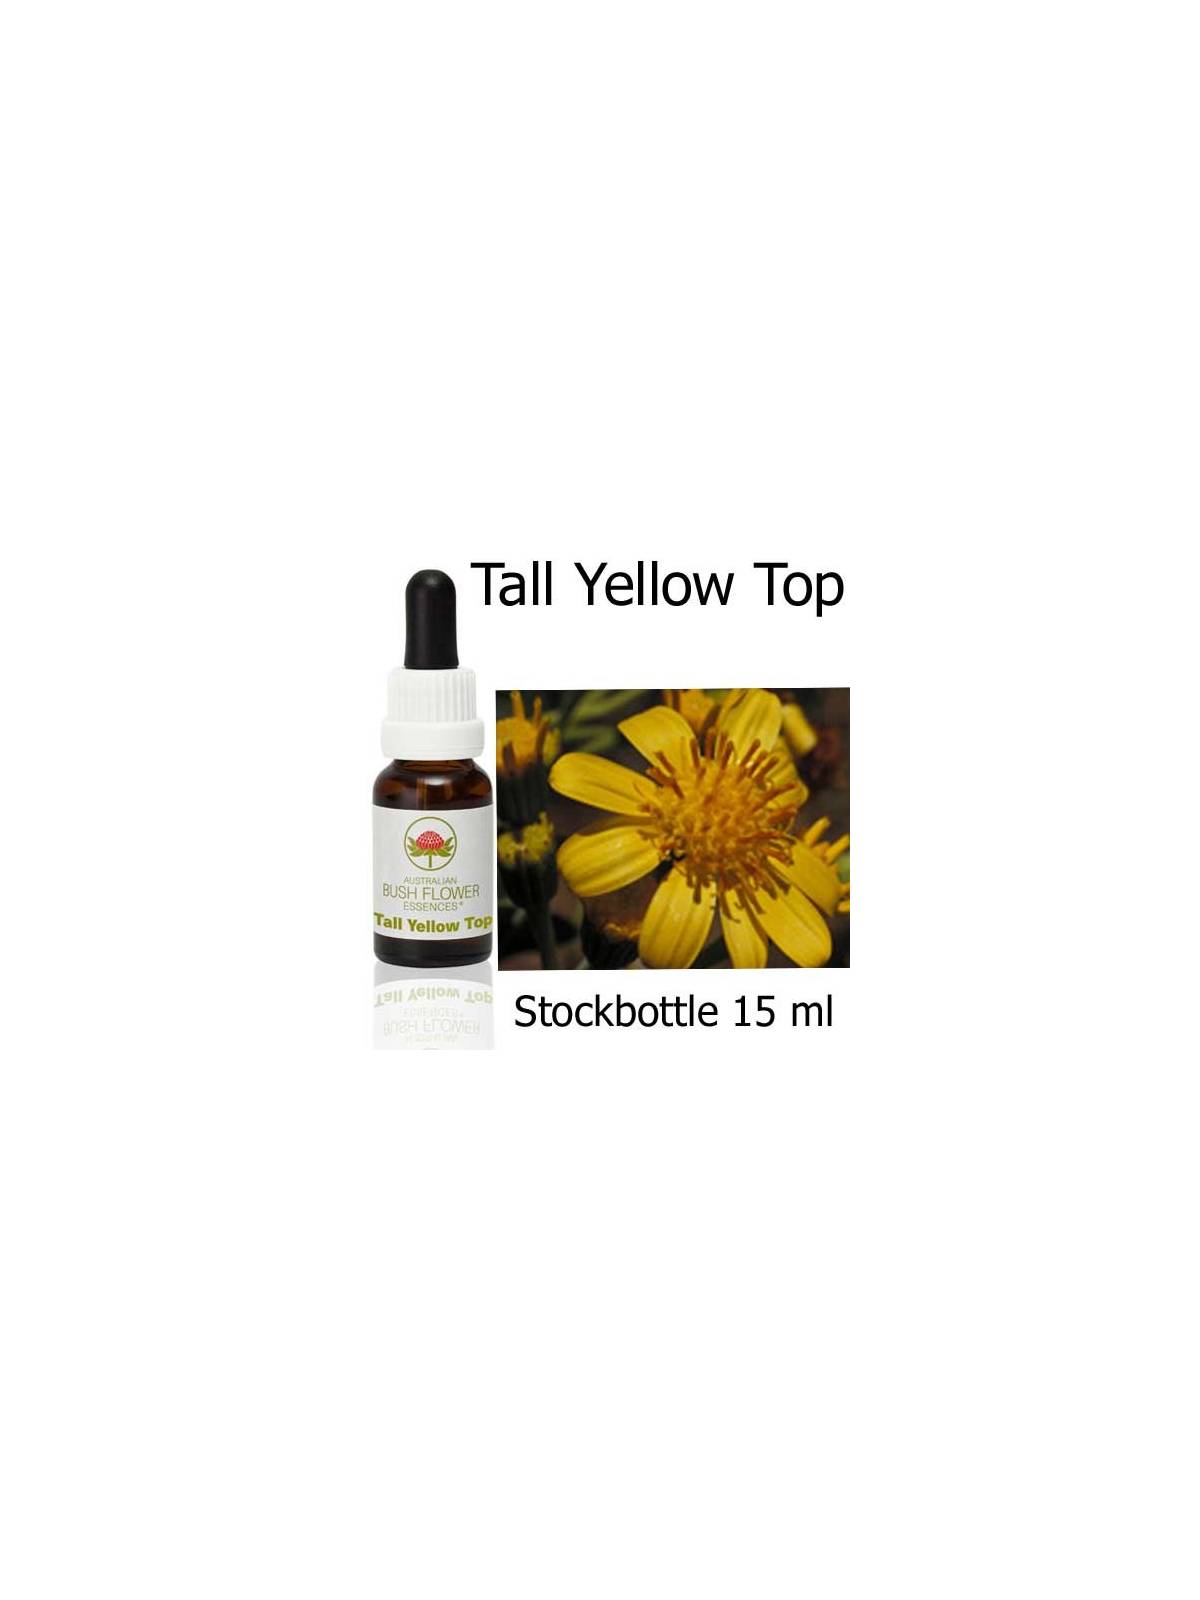 Fiori Australiani Tall Yellow Top Australian Bush Flower Essences stockbottles